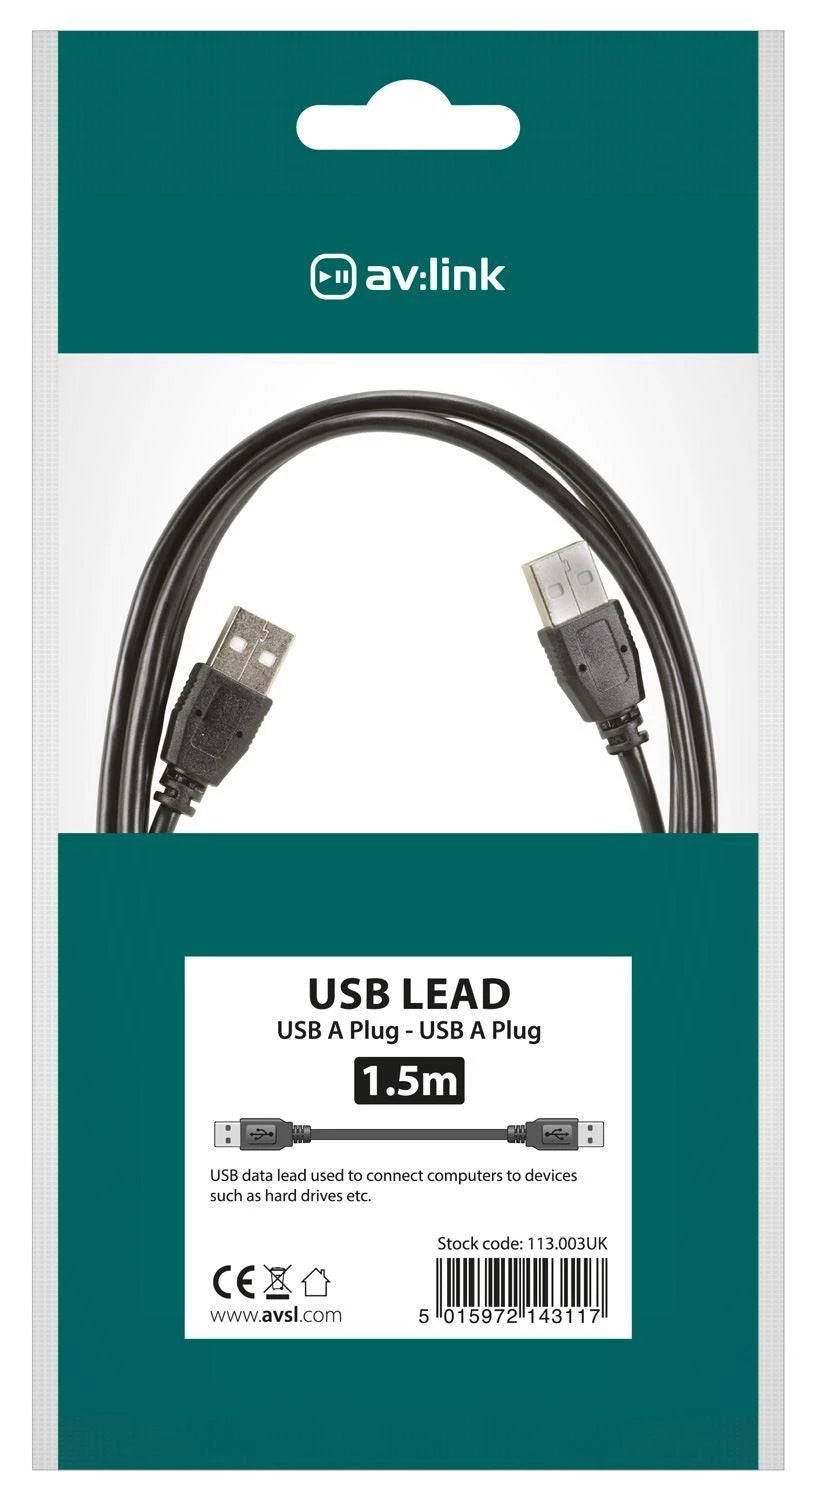 av:link USB Lead USB A Plug - USB A Plug